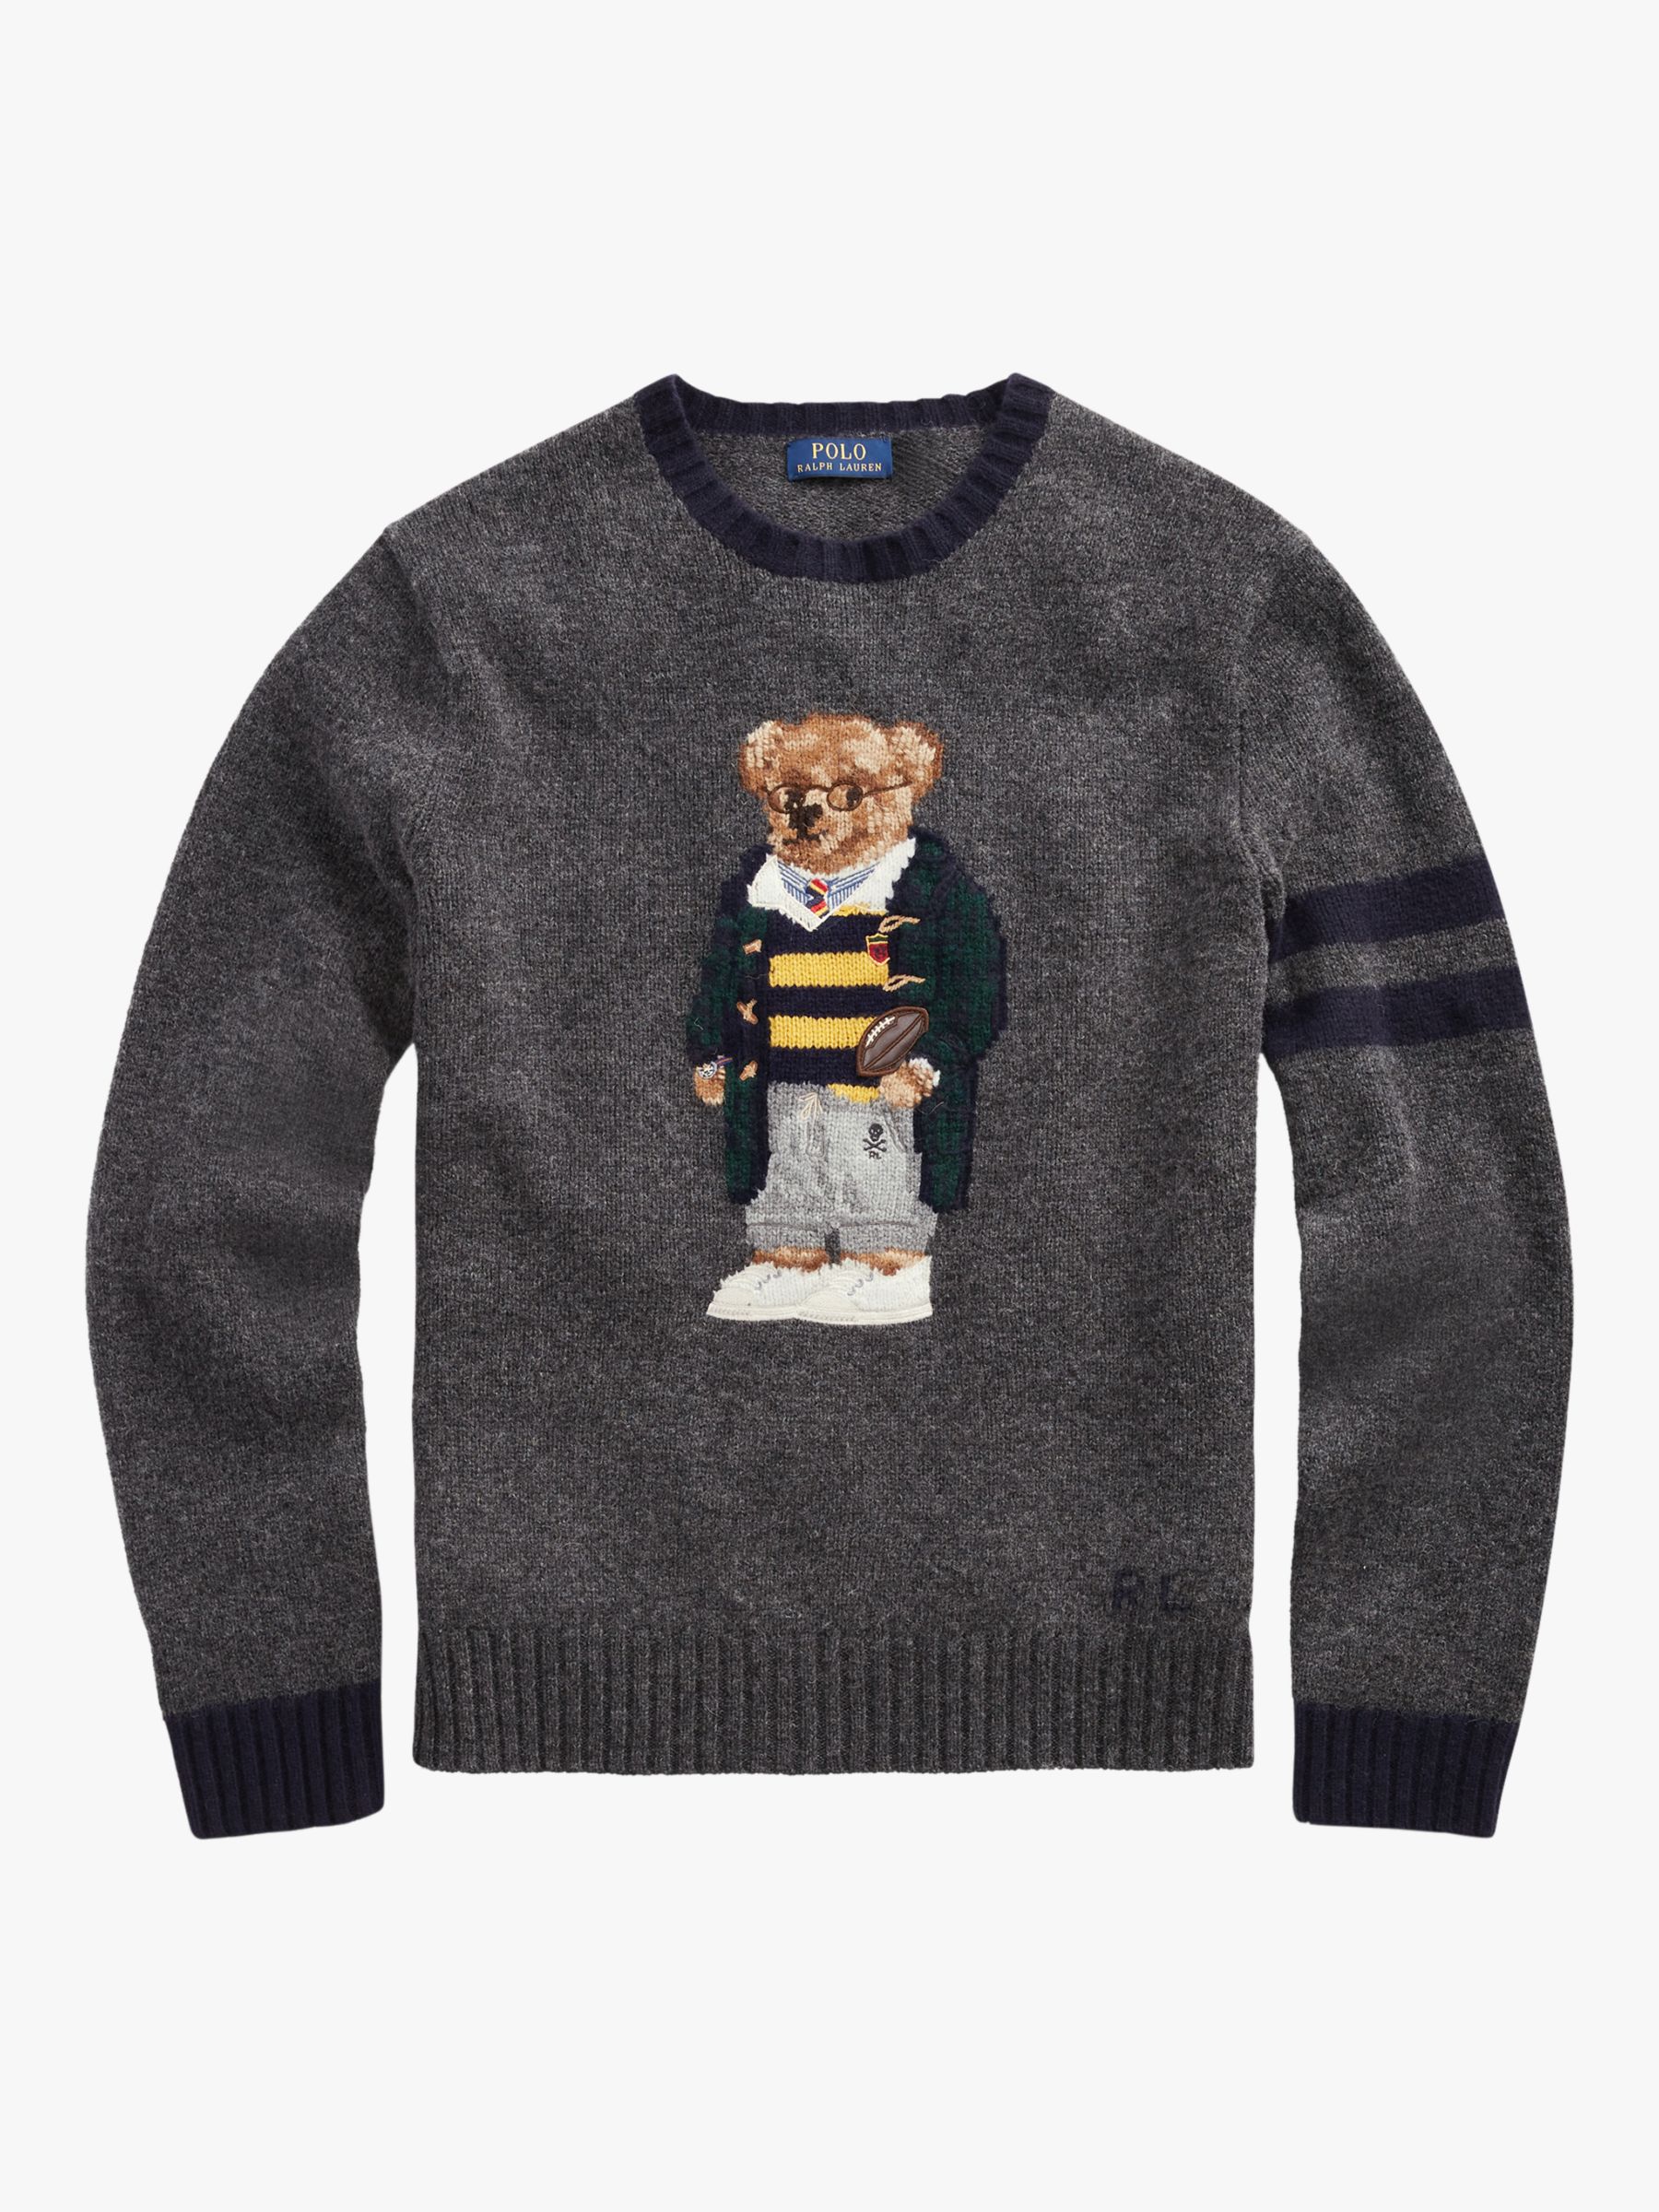 ralph lauren polo bear sweater sale